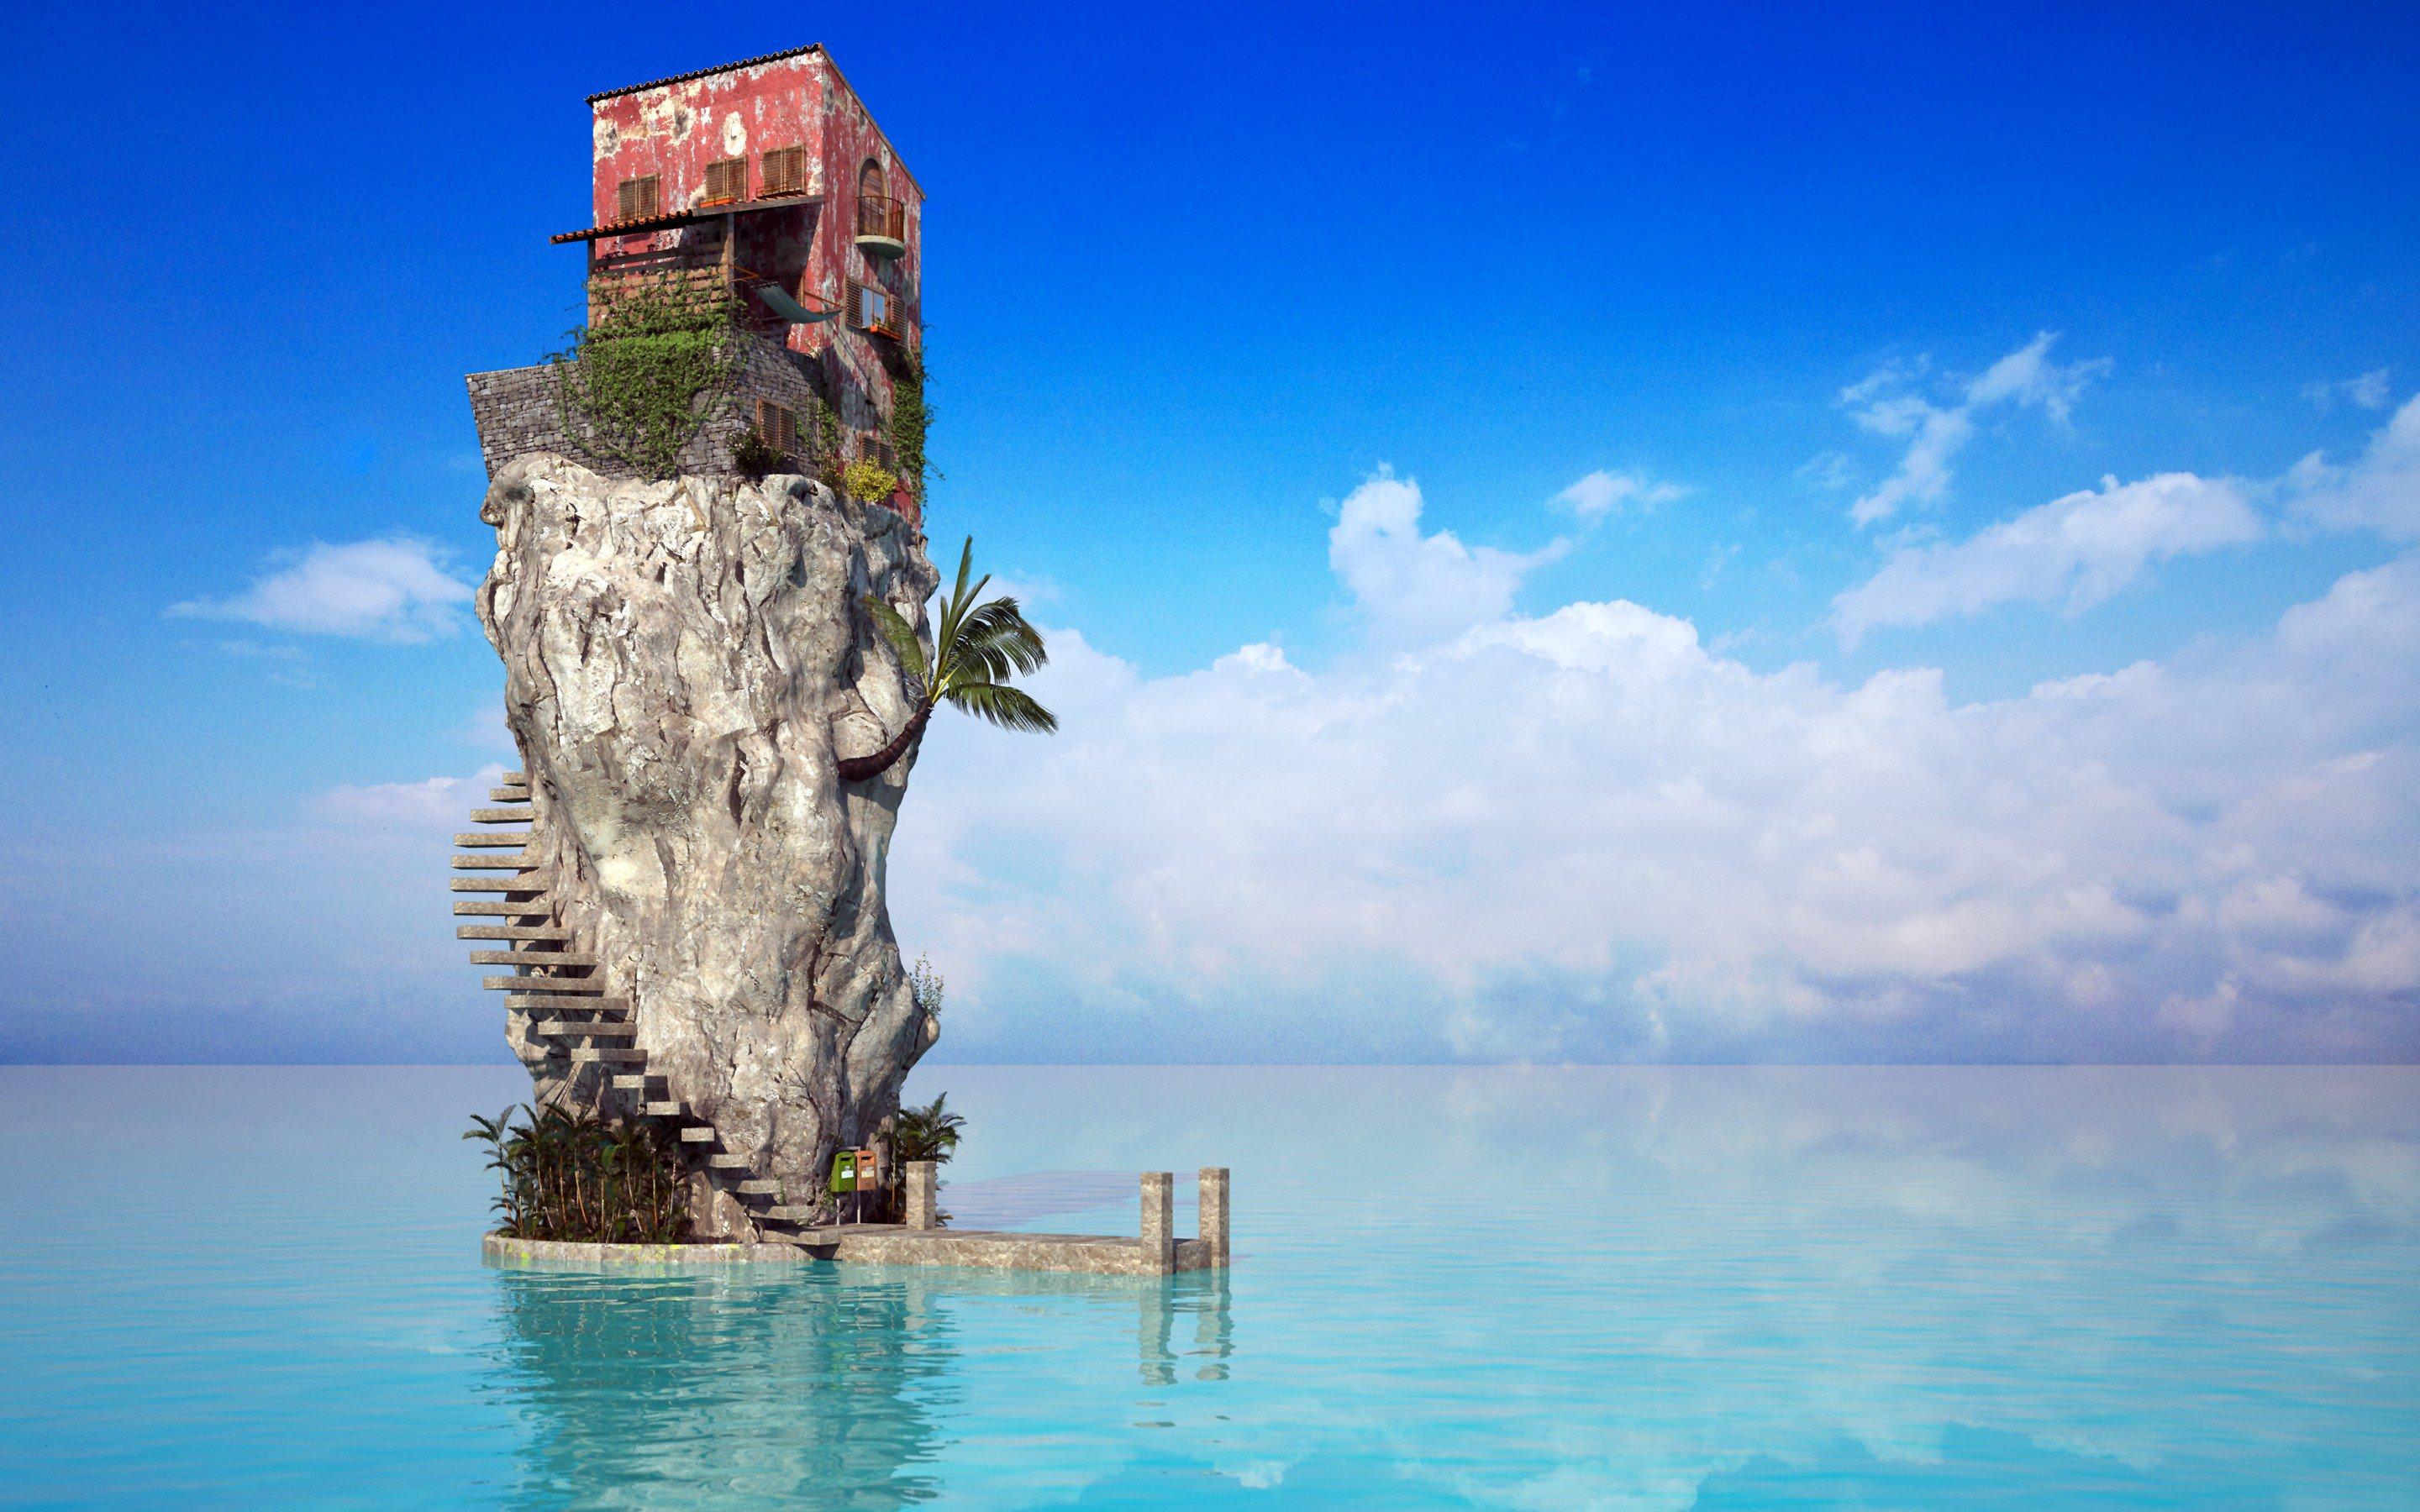 Sea House, HD Creative, 4k Wallpaper, Image, Background